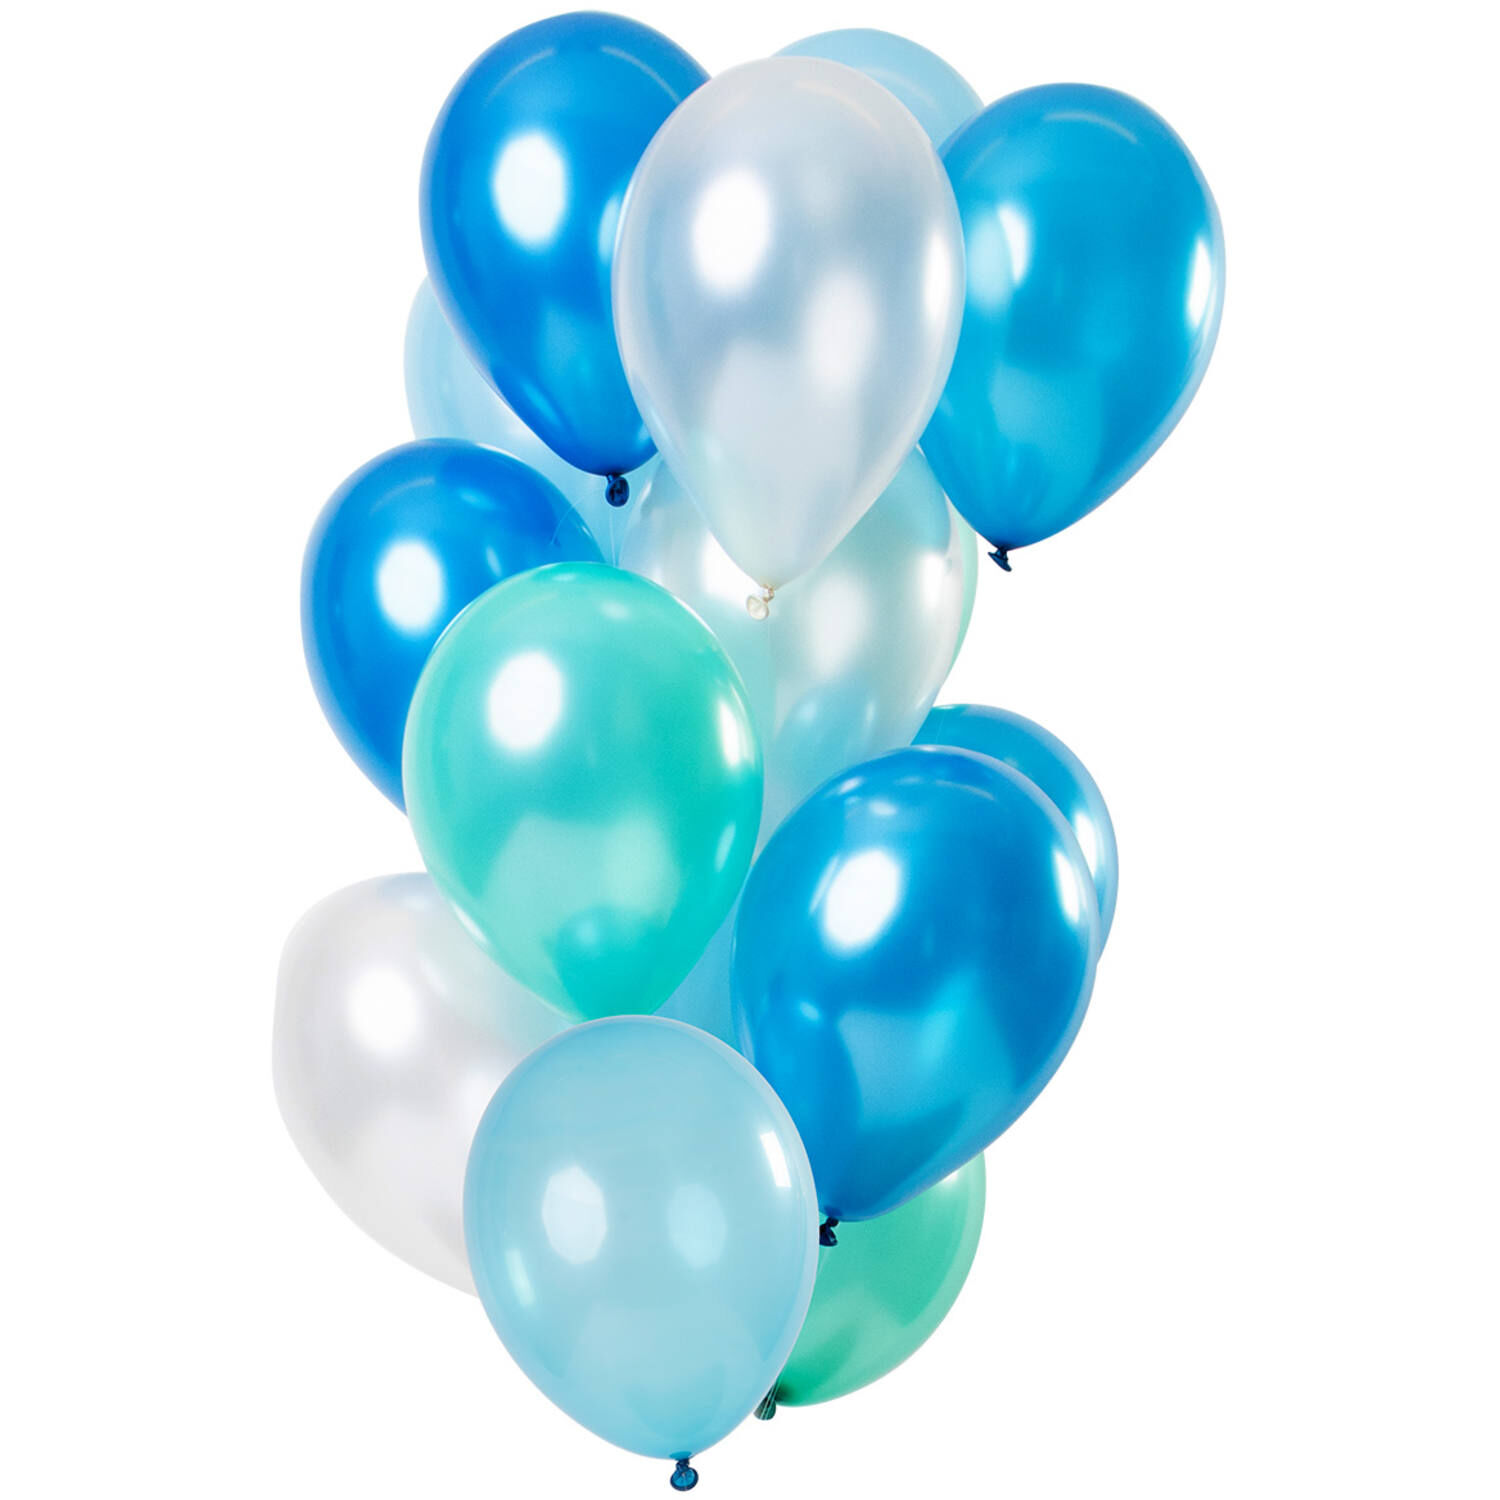 NEU Premium-Latex-Luftballons Blue Azure Metallic, 33cm, 12 Stk.